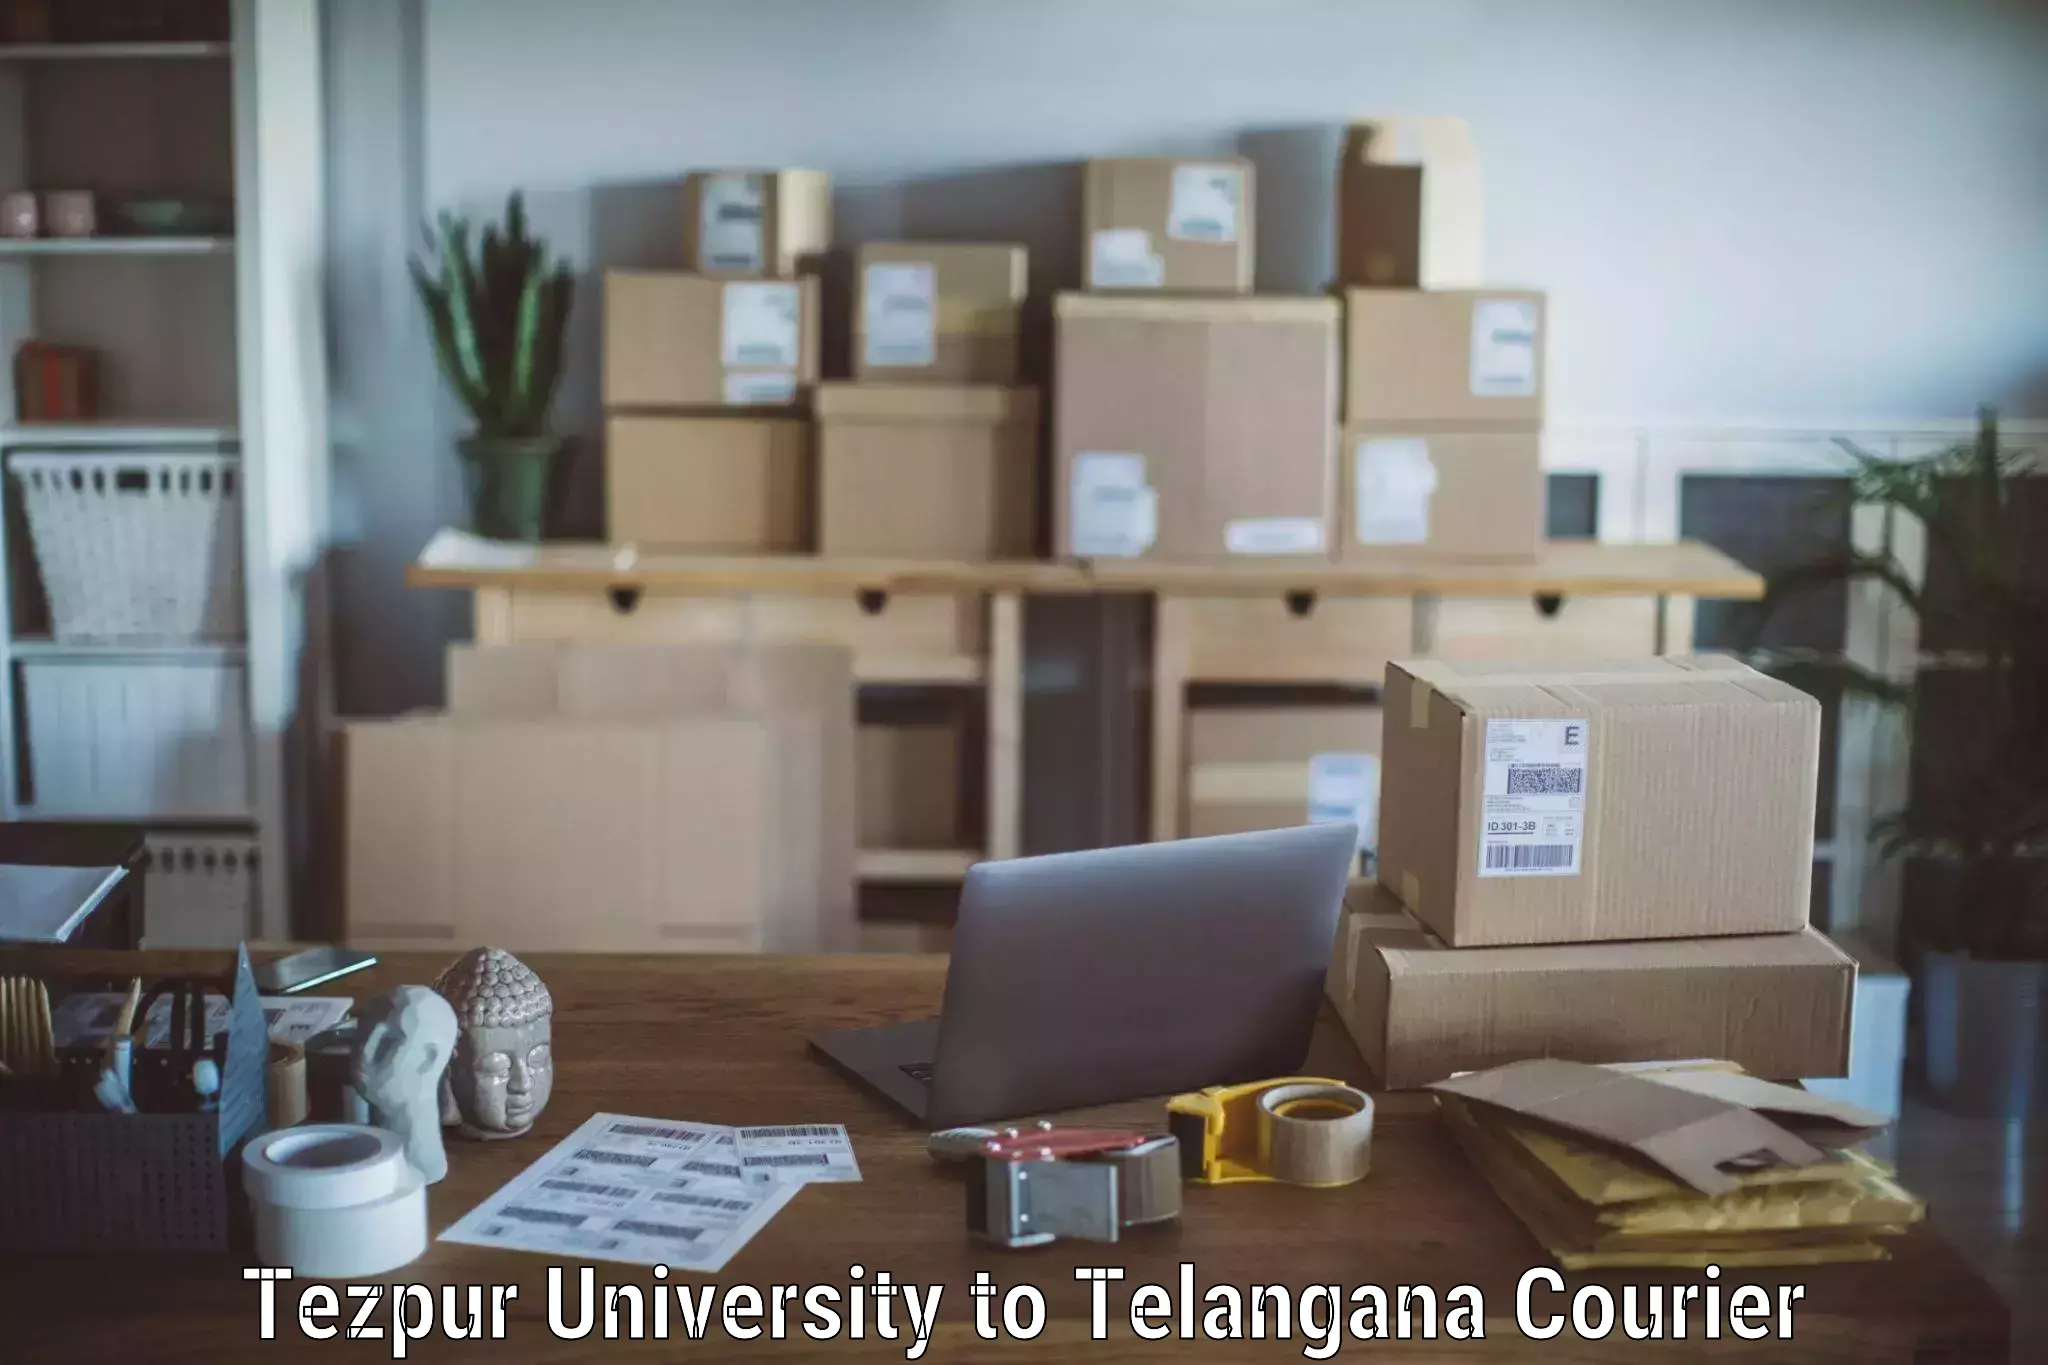 Furniture delivery service Tezpur University to Marikal